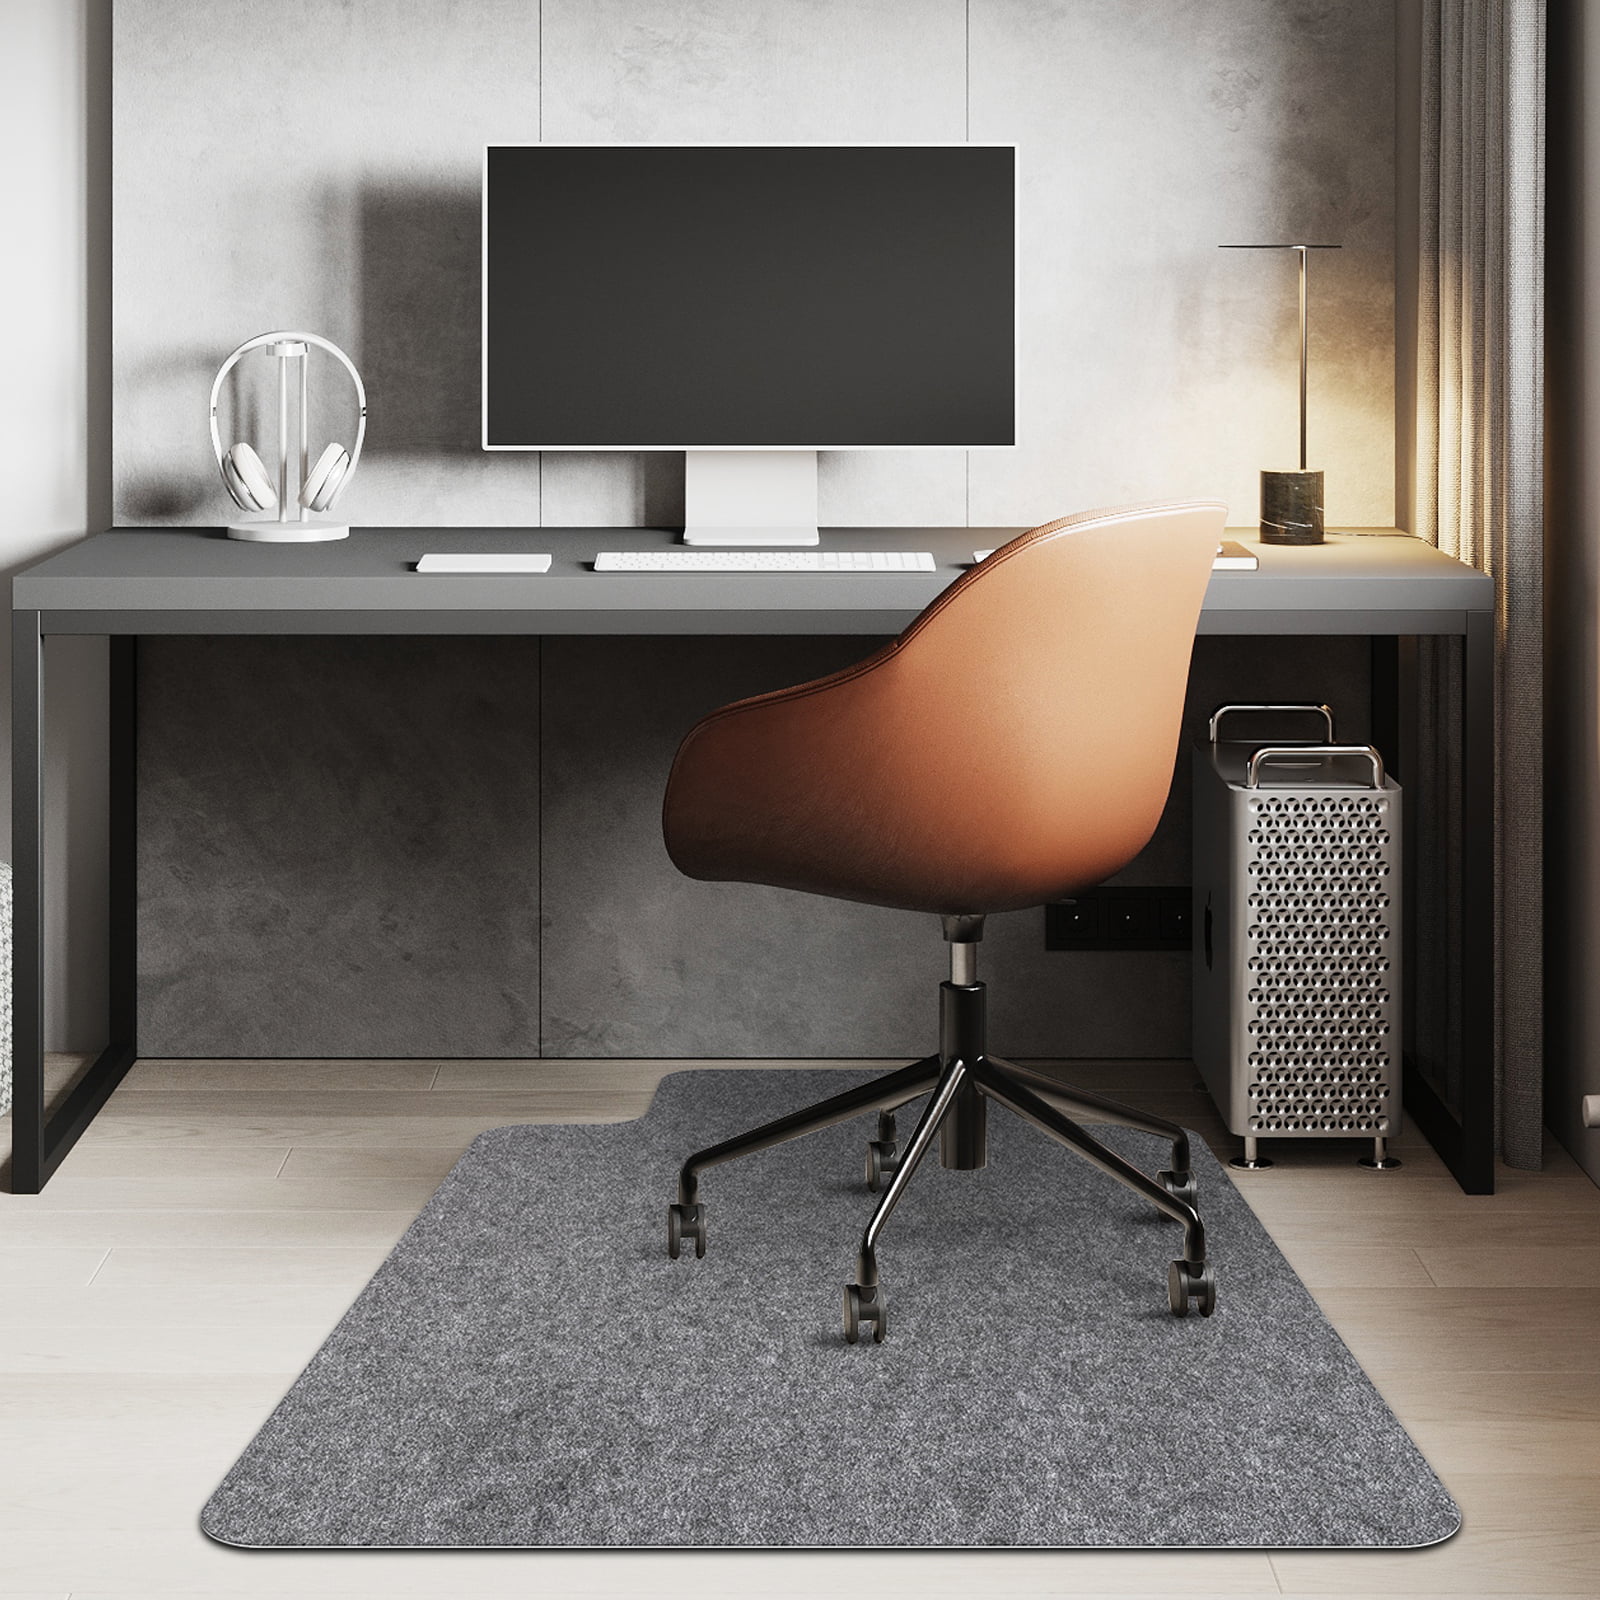 Chair Mat 55x35Office Chair Mat for Hardwood Floor,Floor Protector For  Desk Chair,Light Gray 